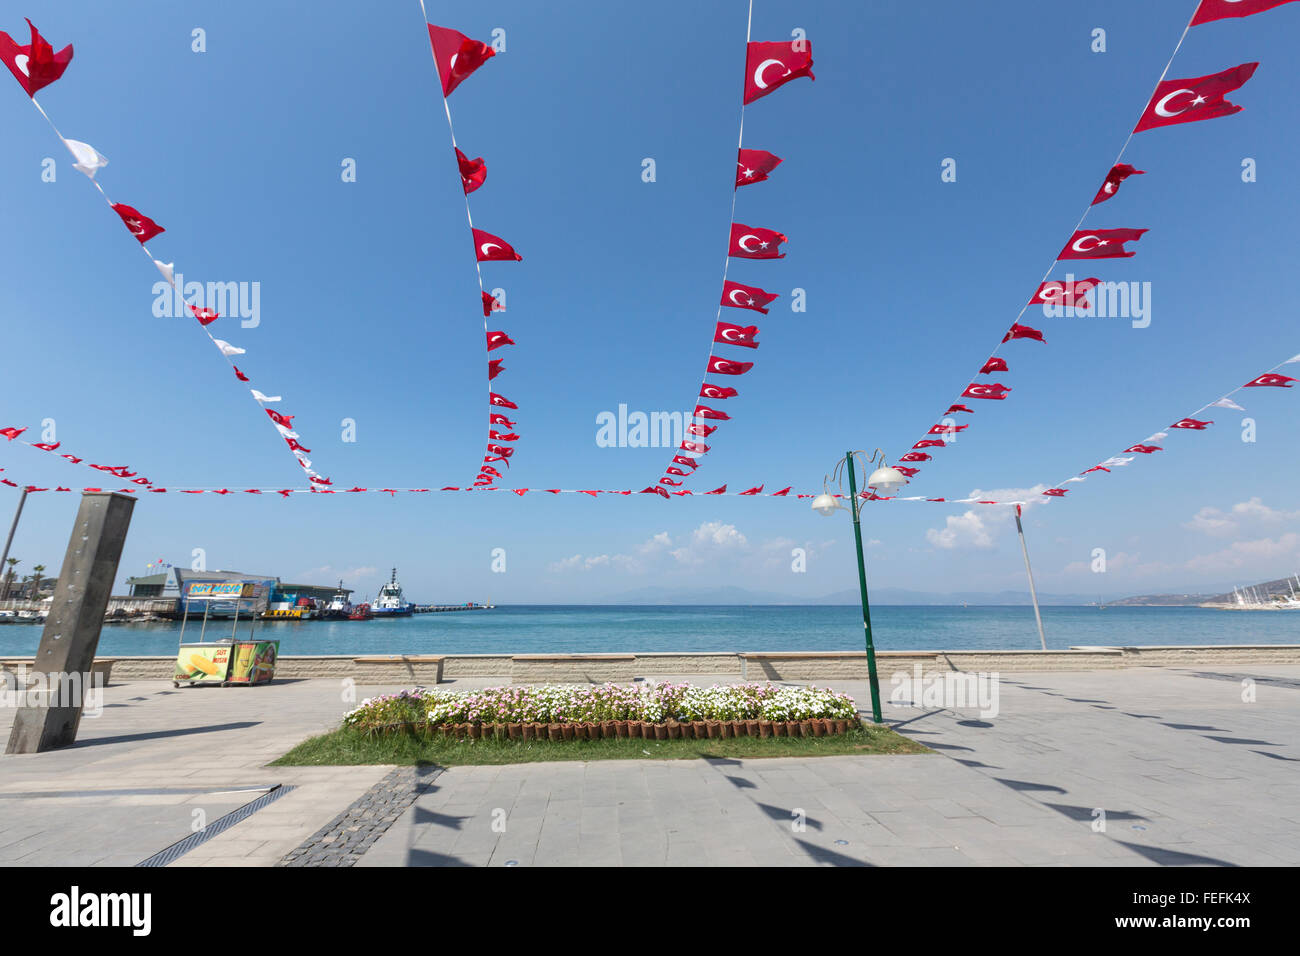 Small Turkish flags with Aegean sea in Atatürk Boulevard in Kuşadası harbor, Turkey Stock Photo